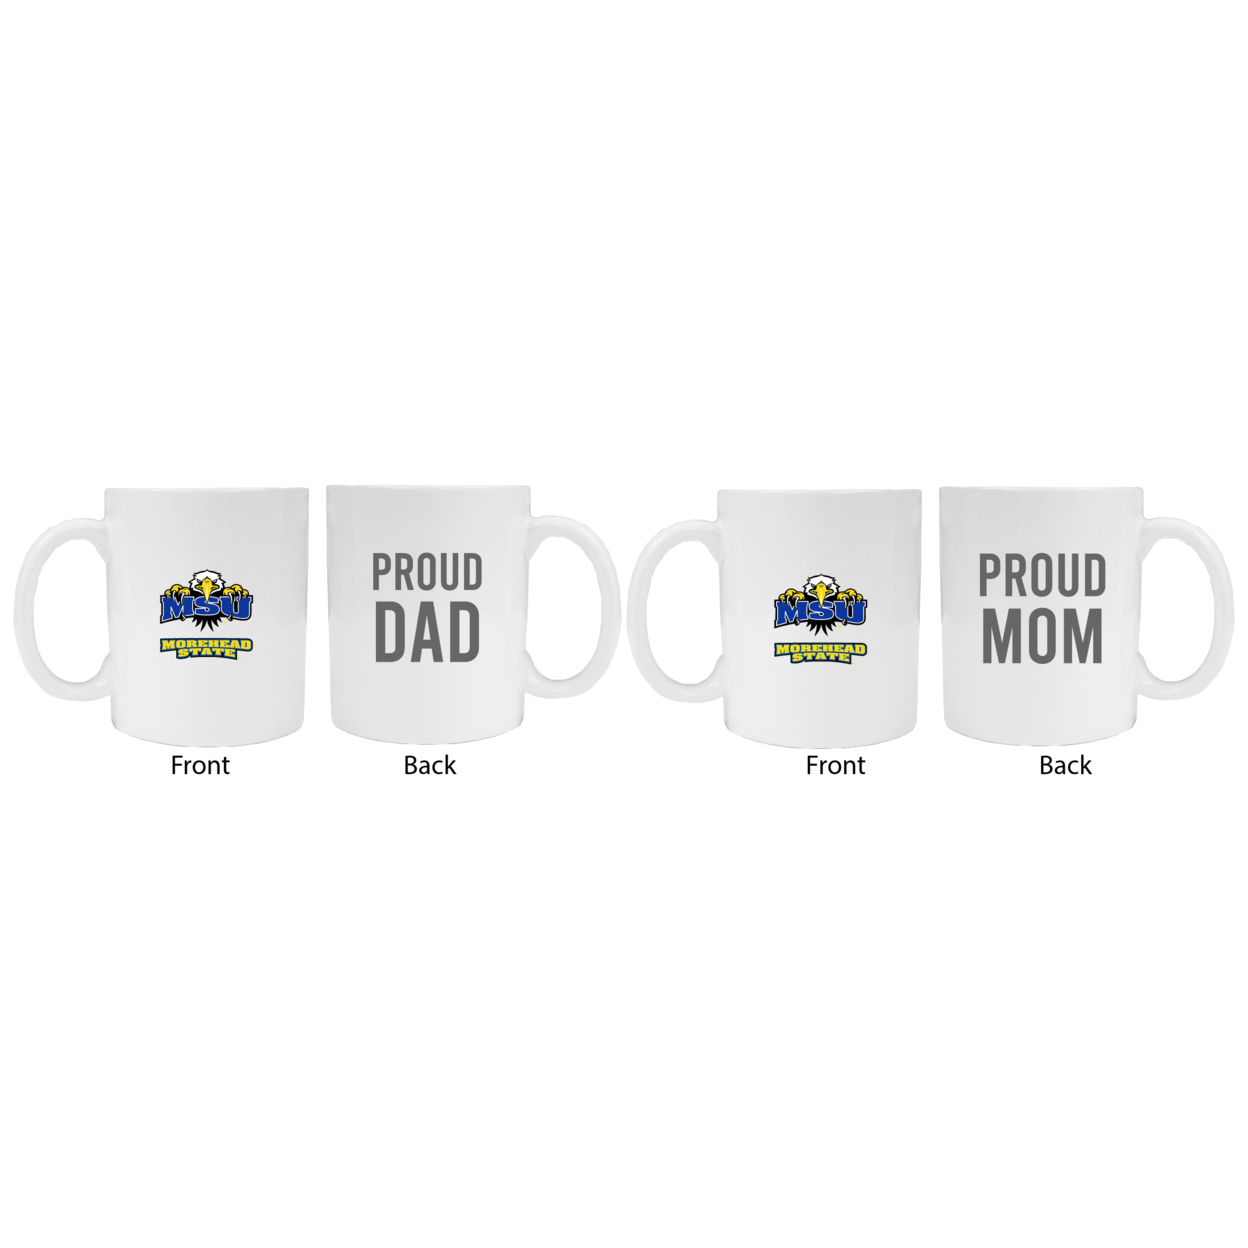 Morehead State University Proud Mom And Dad White Ceramic Coffee Mug 2 Pack (White).